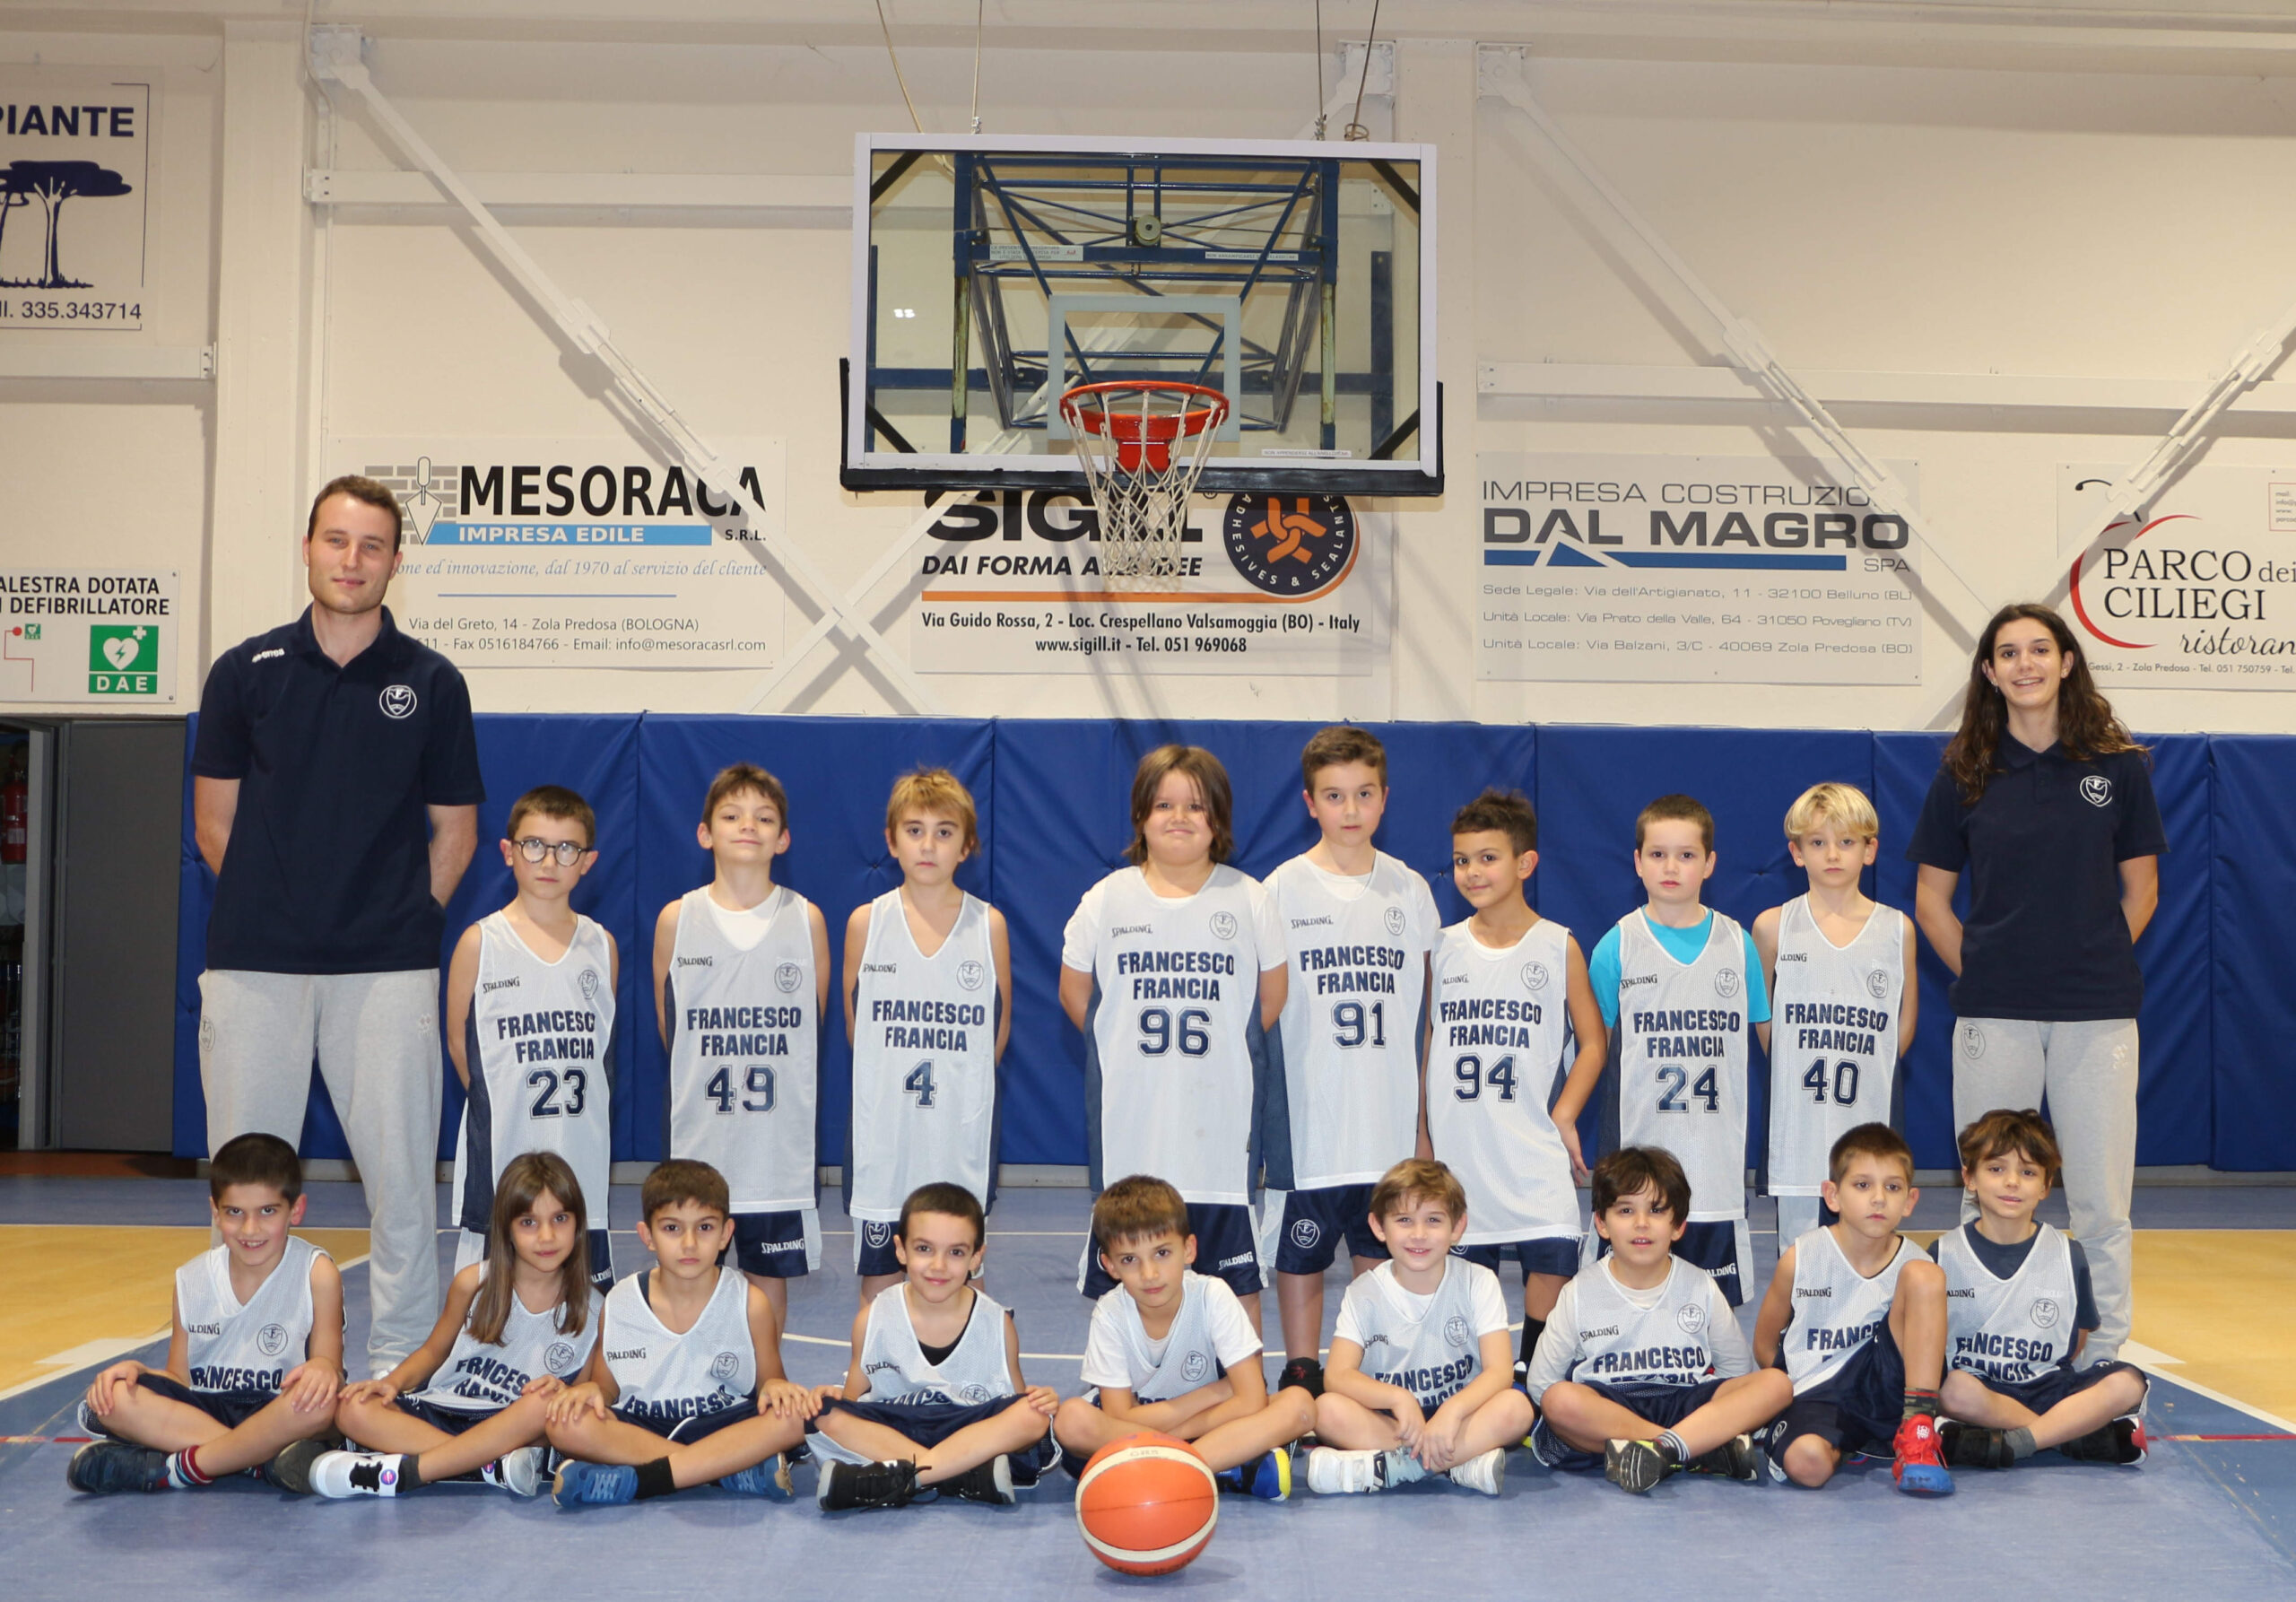 Squadra Scoiattoli 2015 - Francesco Francia Basket